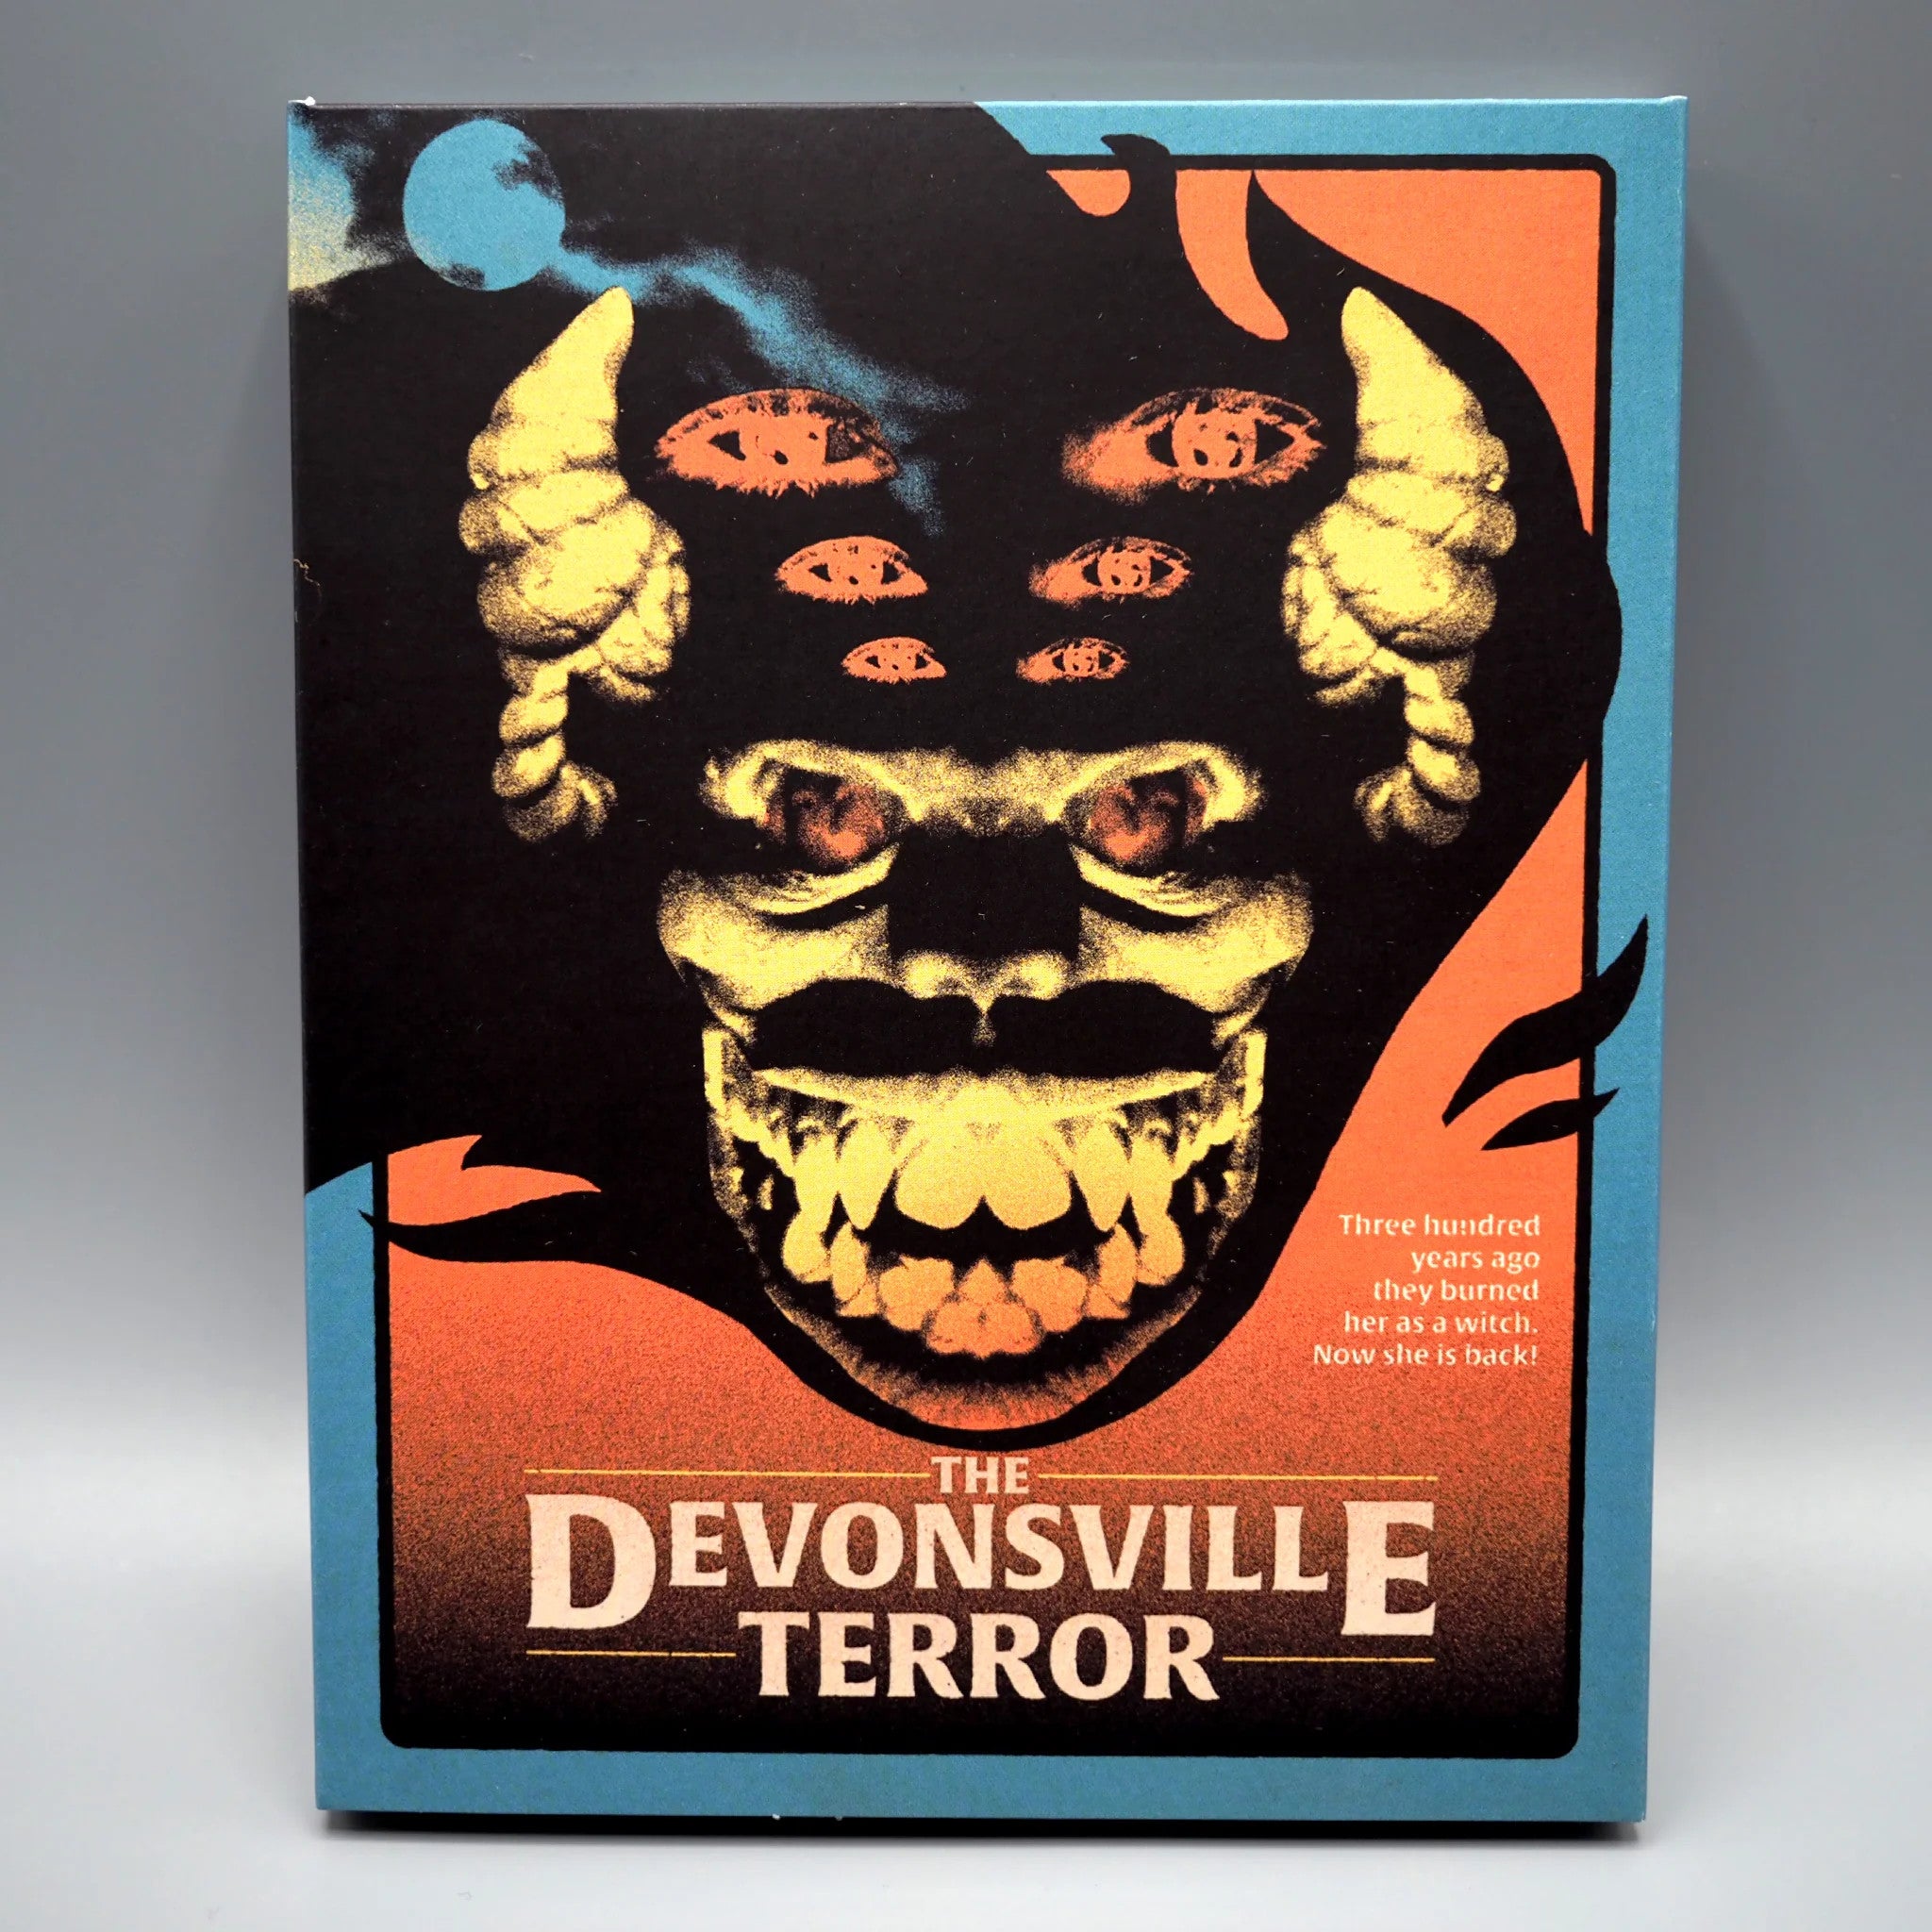 Devonsville Terror (SLIPCOVER) - Darkside Records